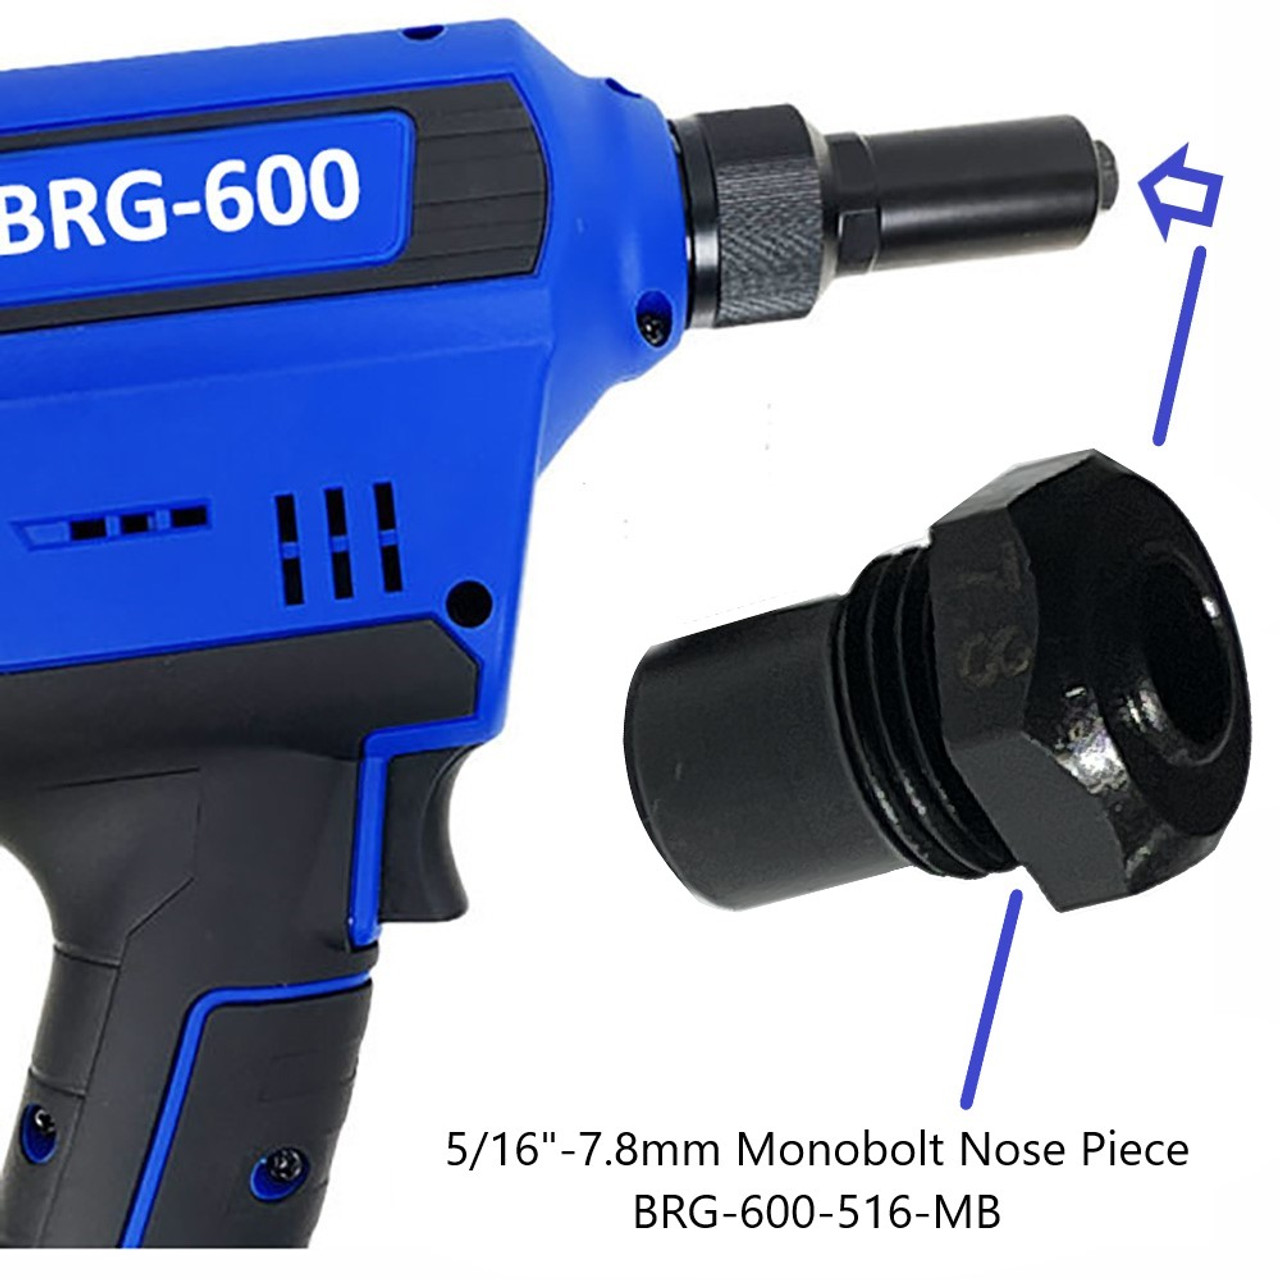 Nose Piece  Monobolt  5/16 -7.8mm - for BRG-600 Blind Rivet Gun BB